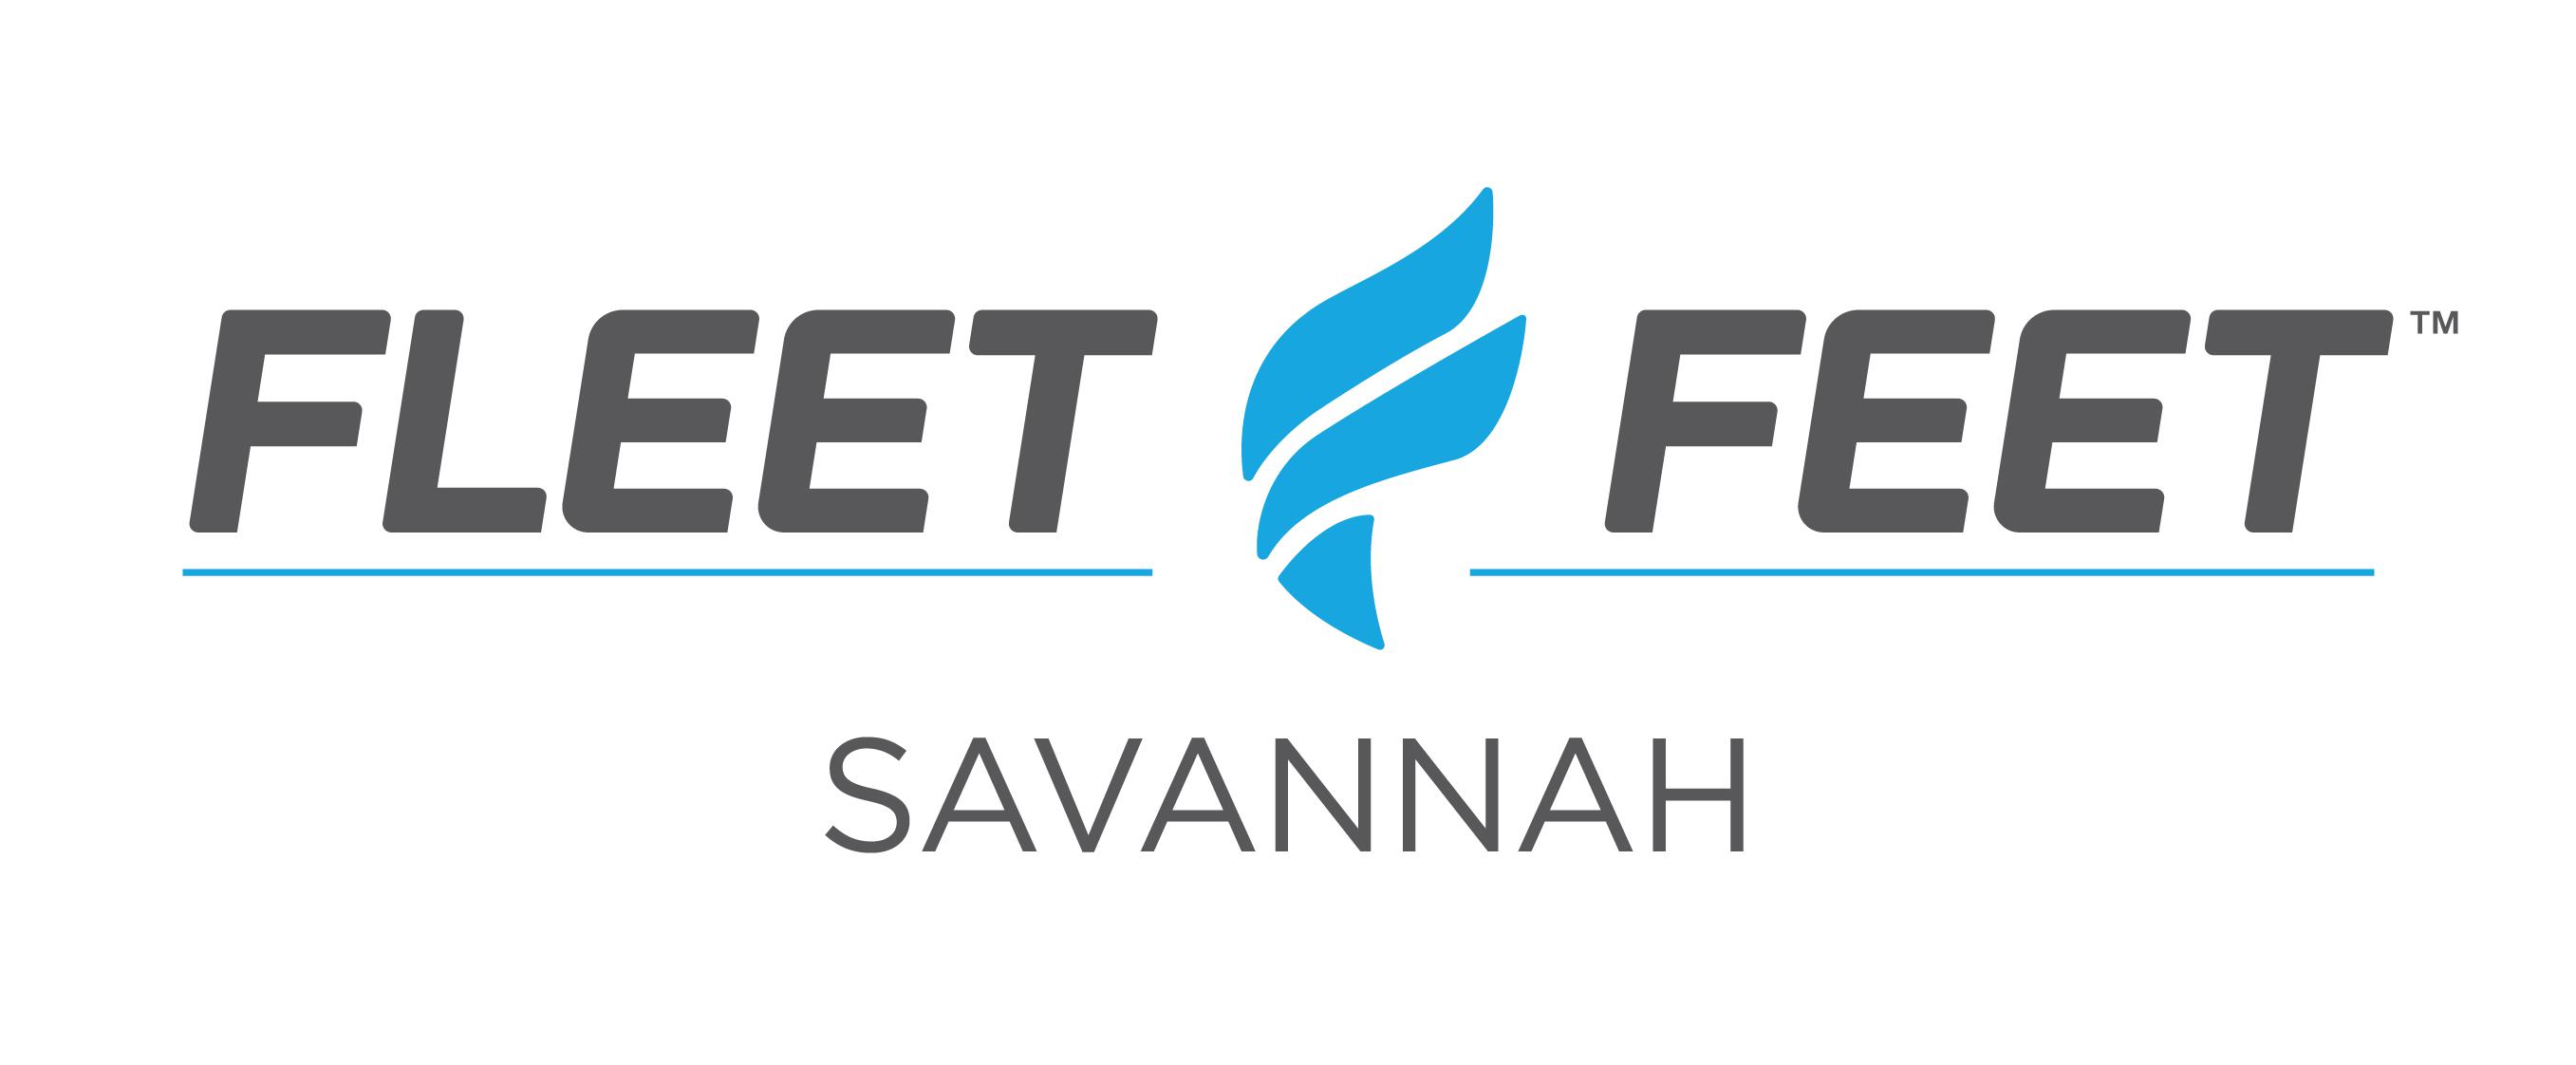 Fleet Feet Savannah Logo